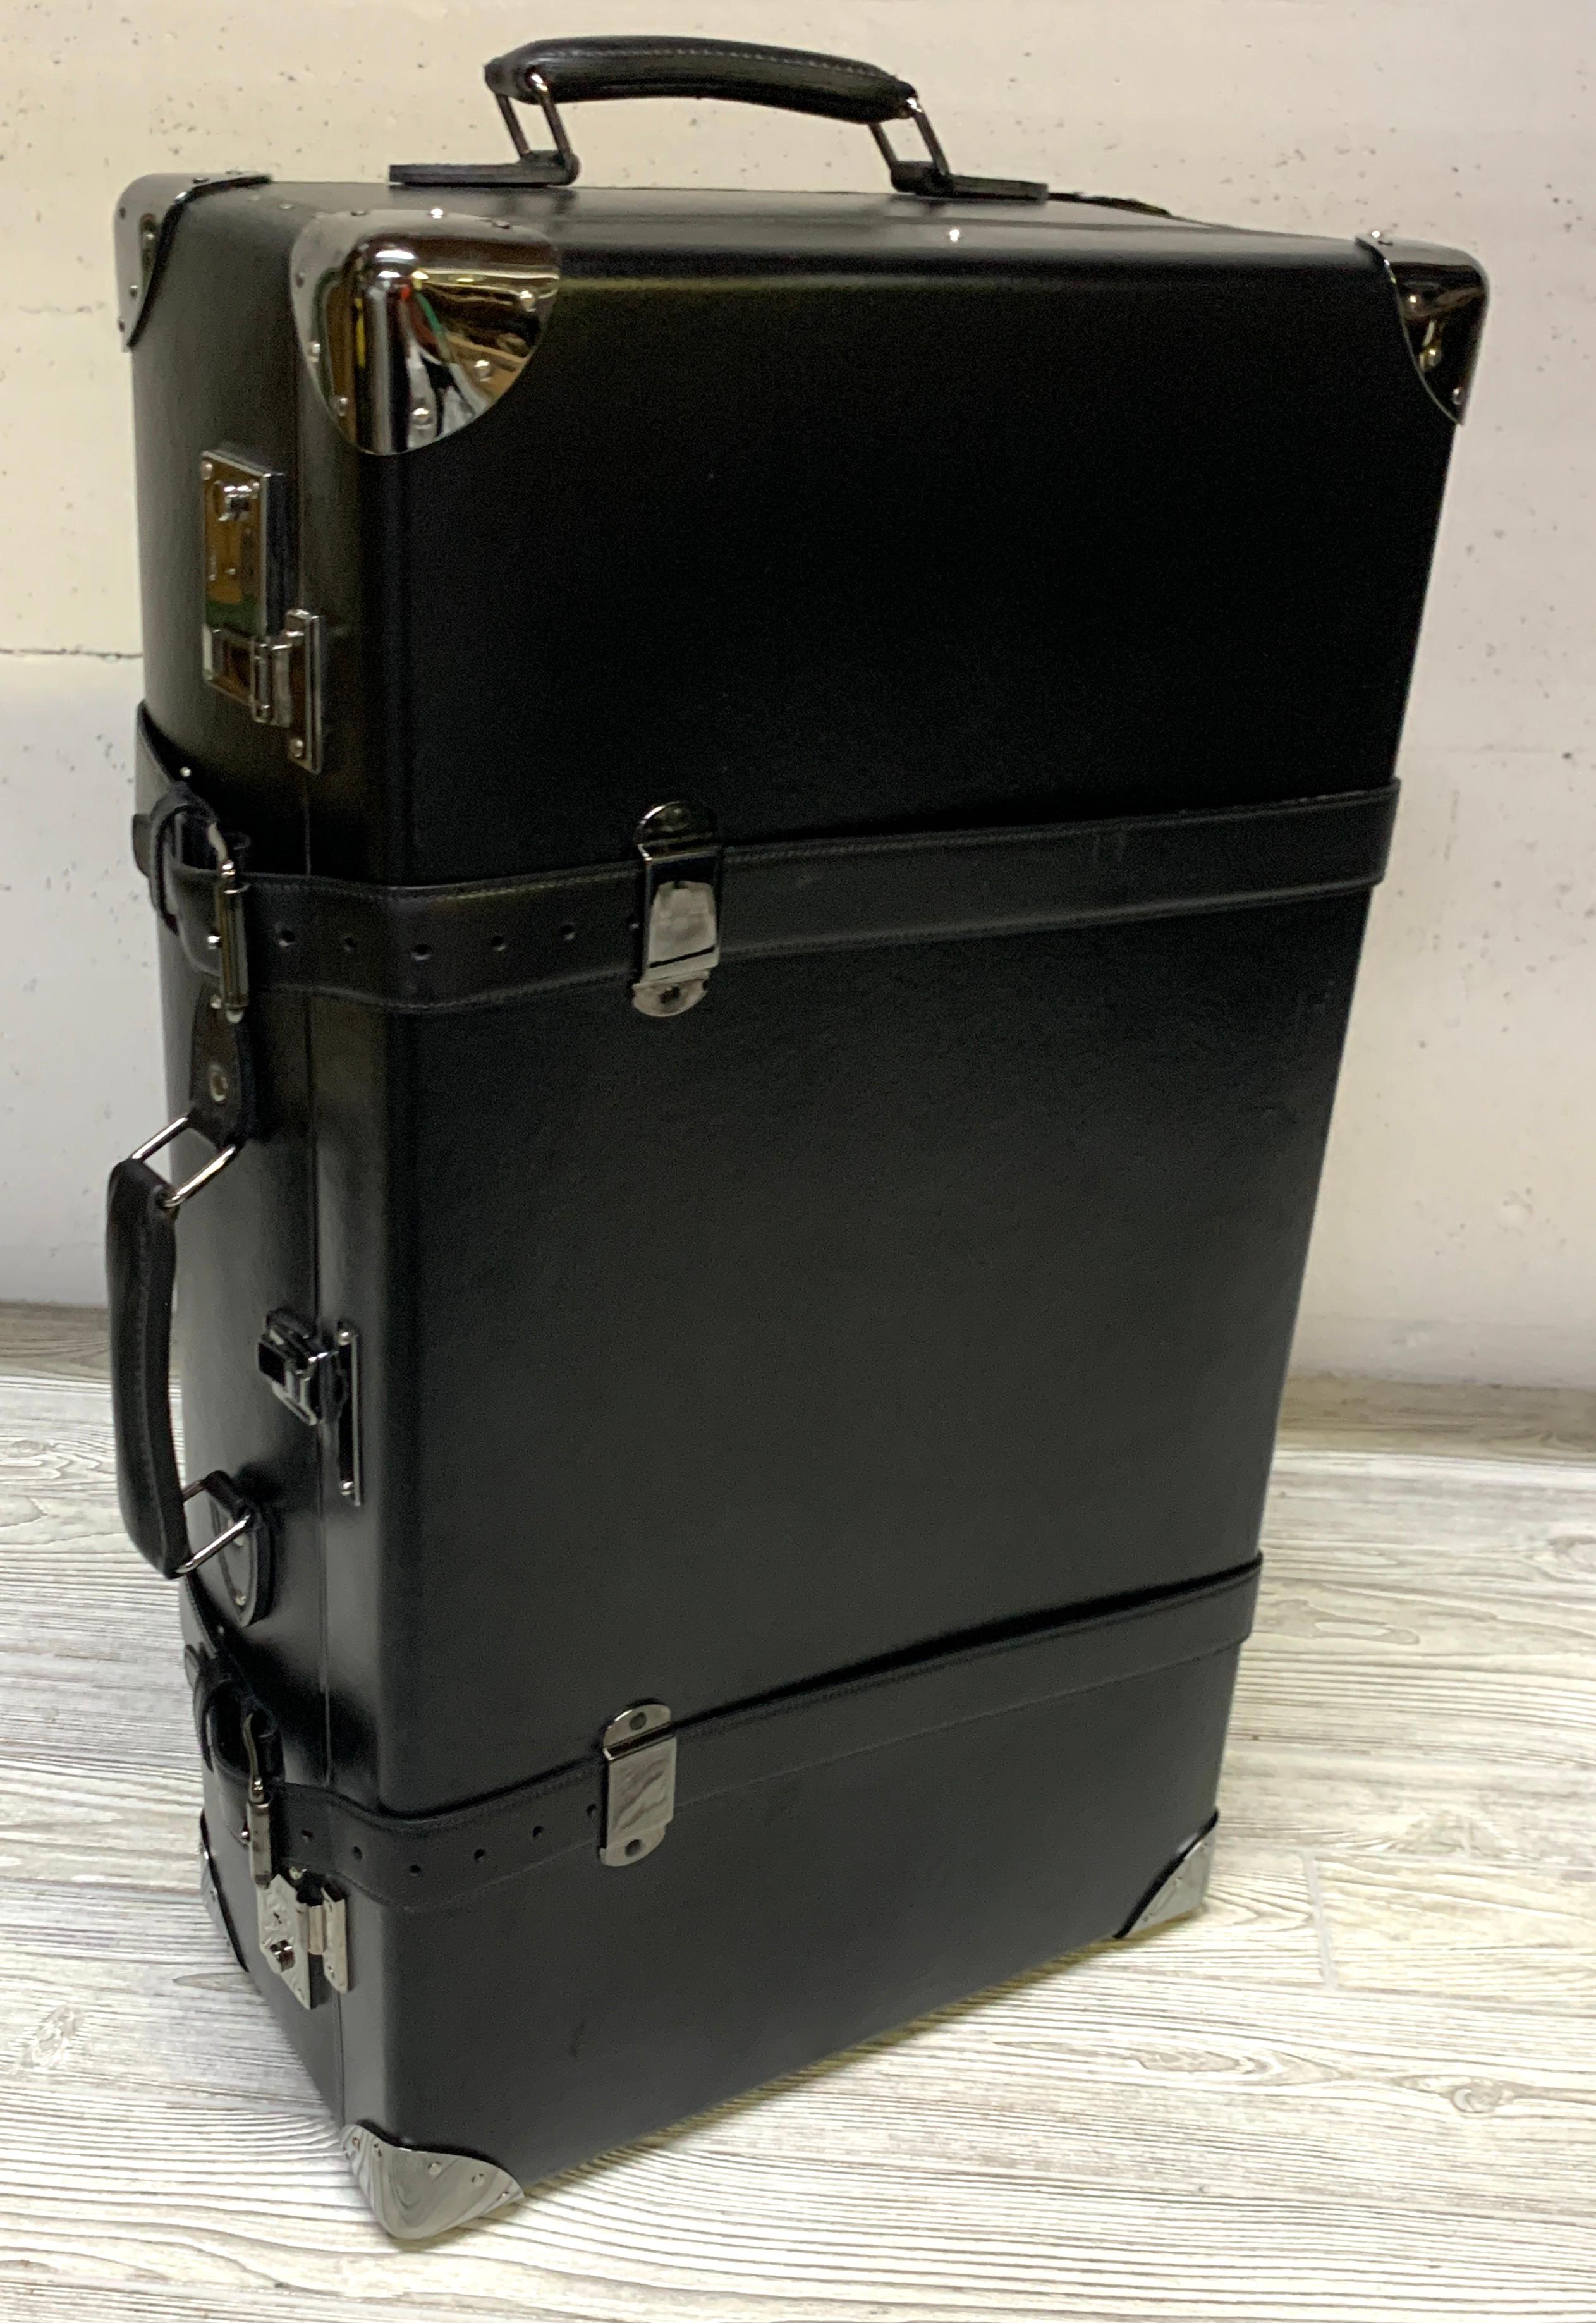 Asprey Londoner Trolley, Black Cross Hatch Suitcase In Good Condition For Sale In West Palm Beach, FL